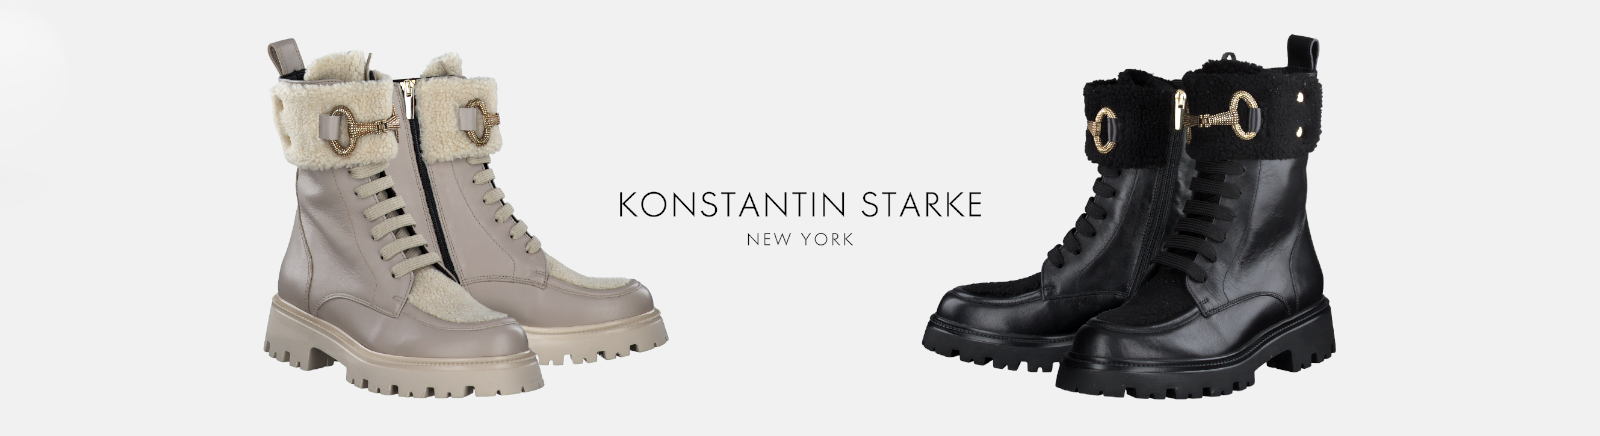 Juppen: Konstantin Starke Western Boots für Damen online shoppen